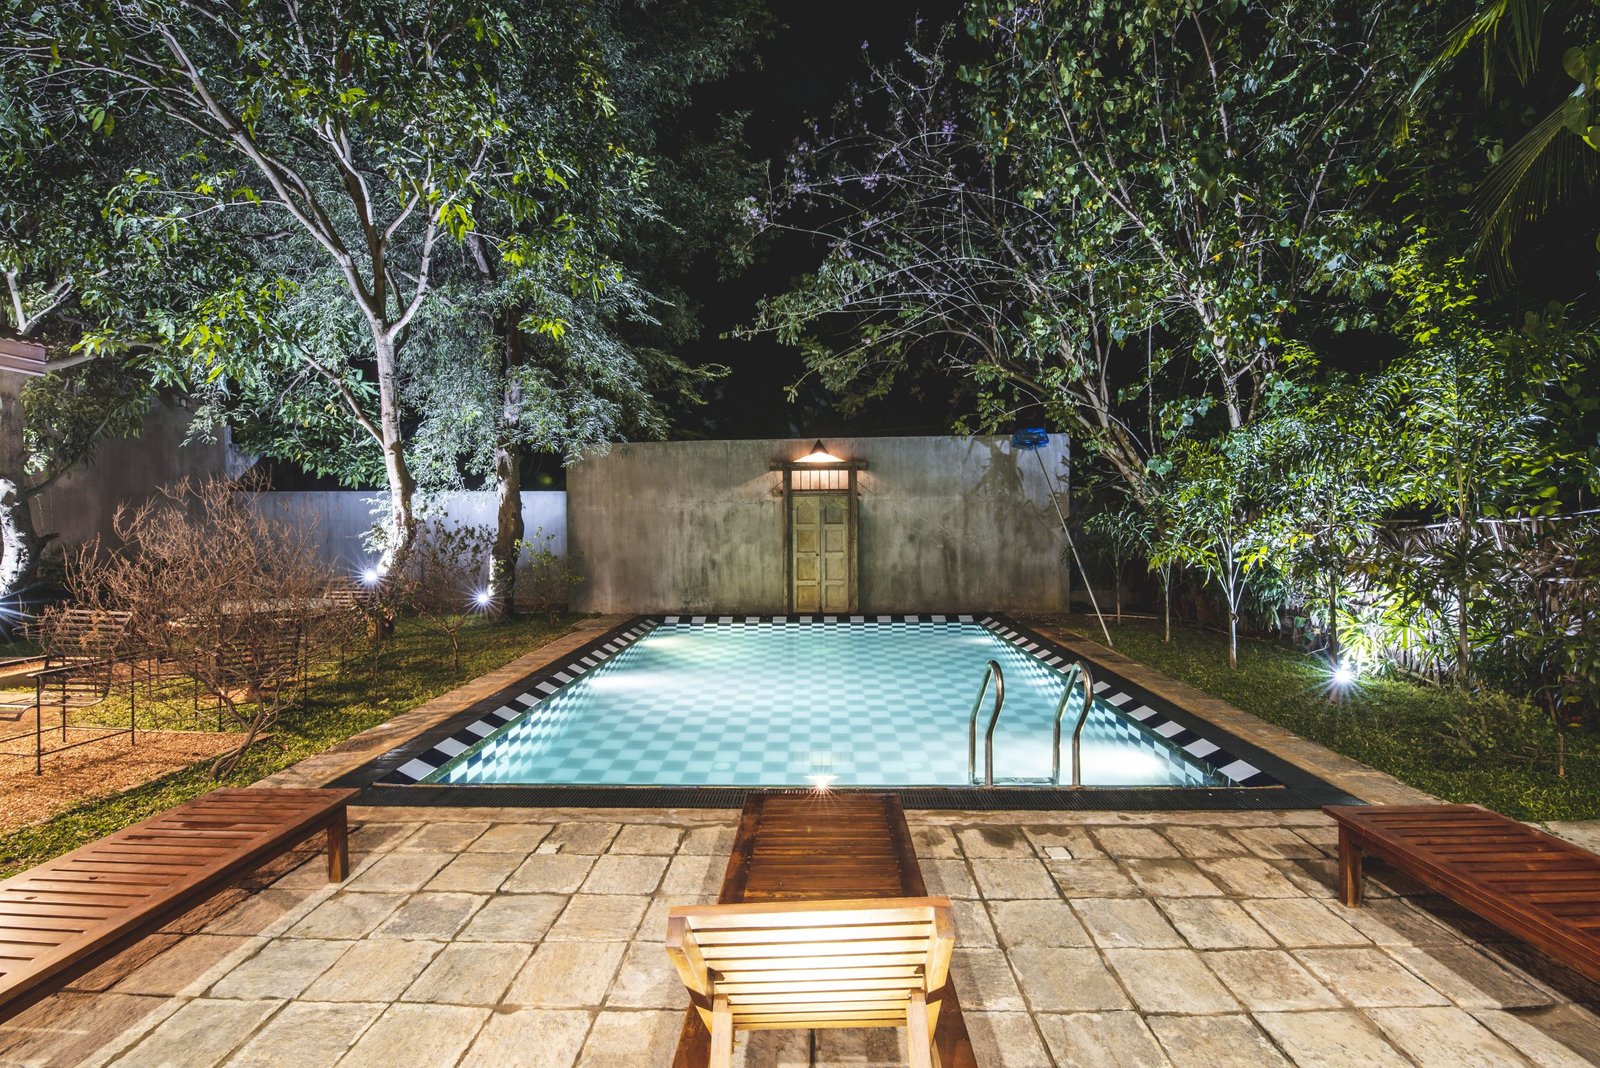 View of pool in the night at Thambu Illam, a luxury heritage villa in Jaffna